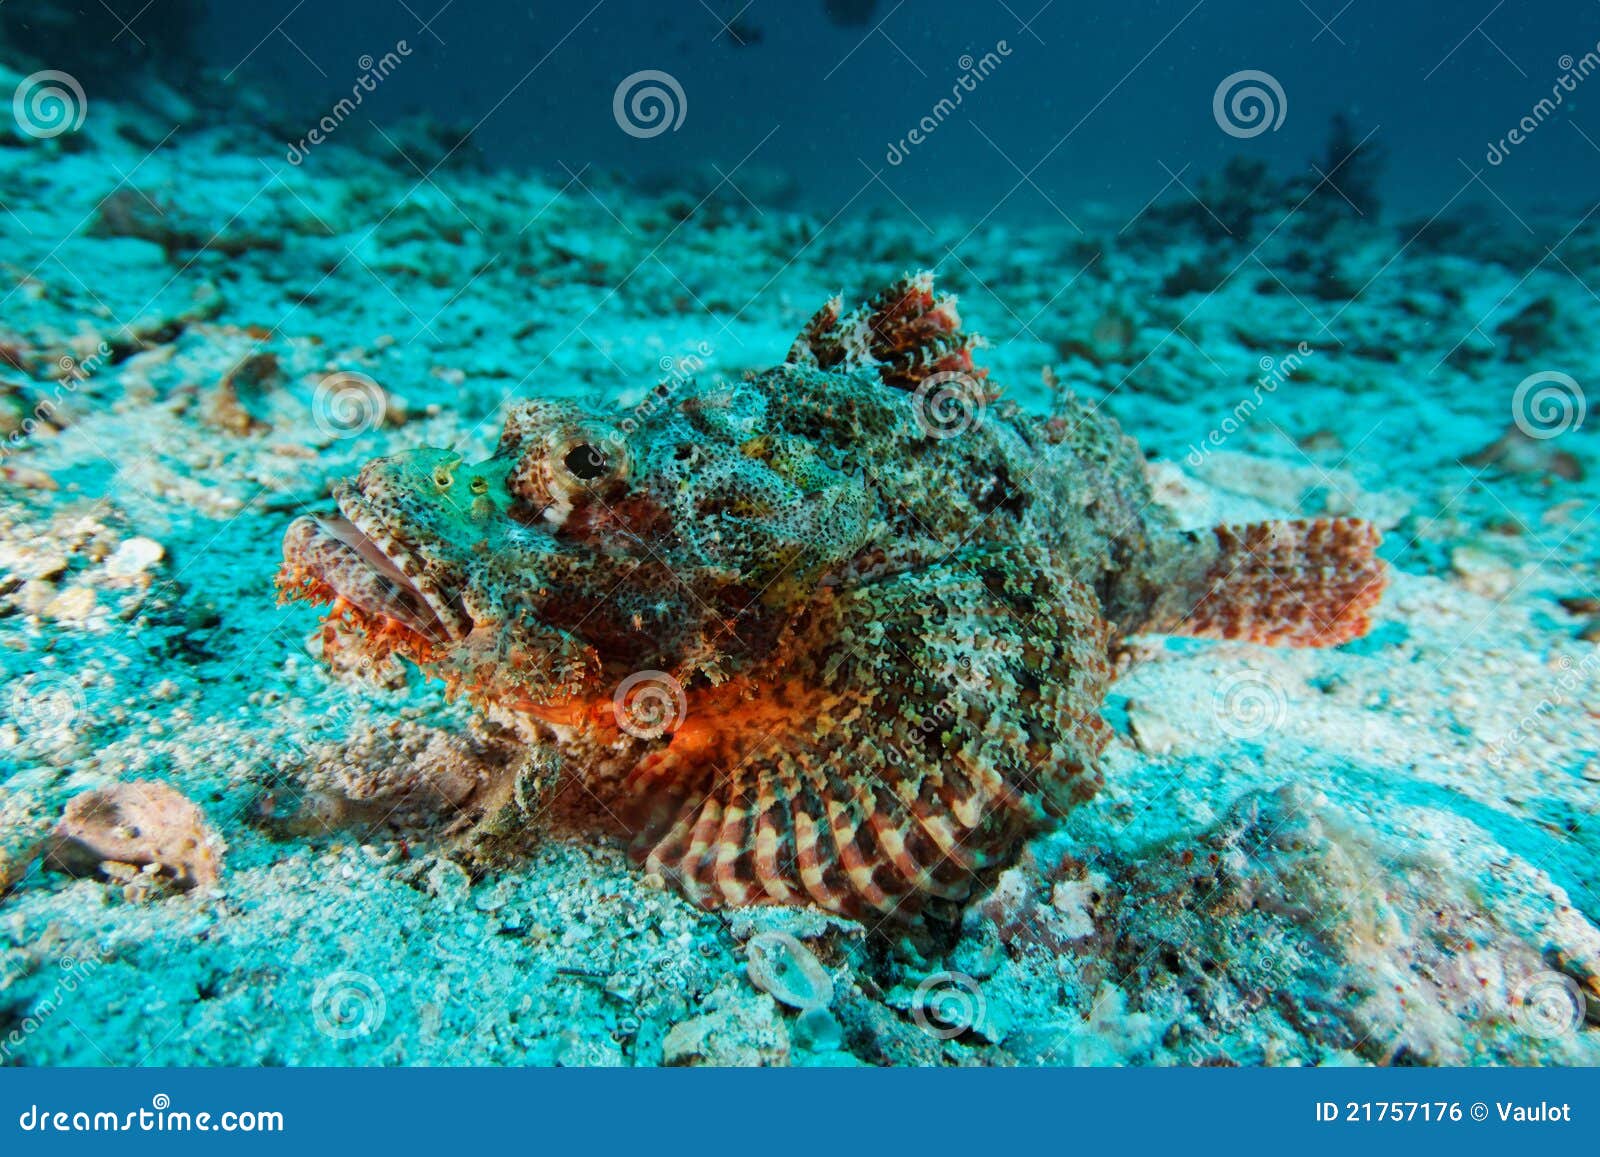 scorpion fish - andaman sea